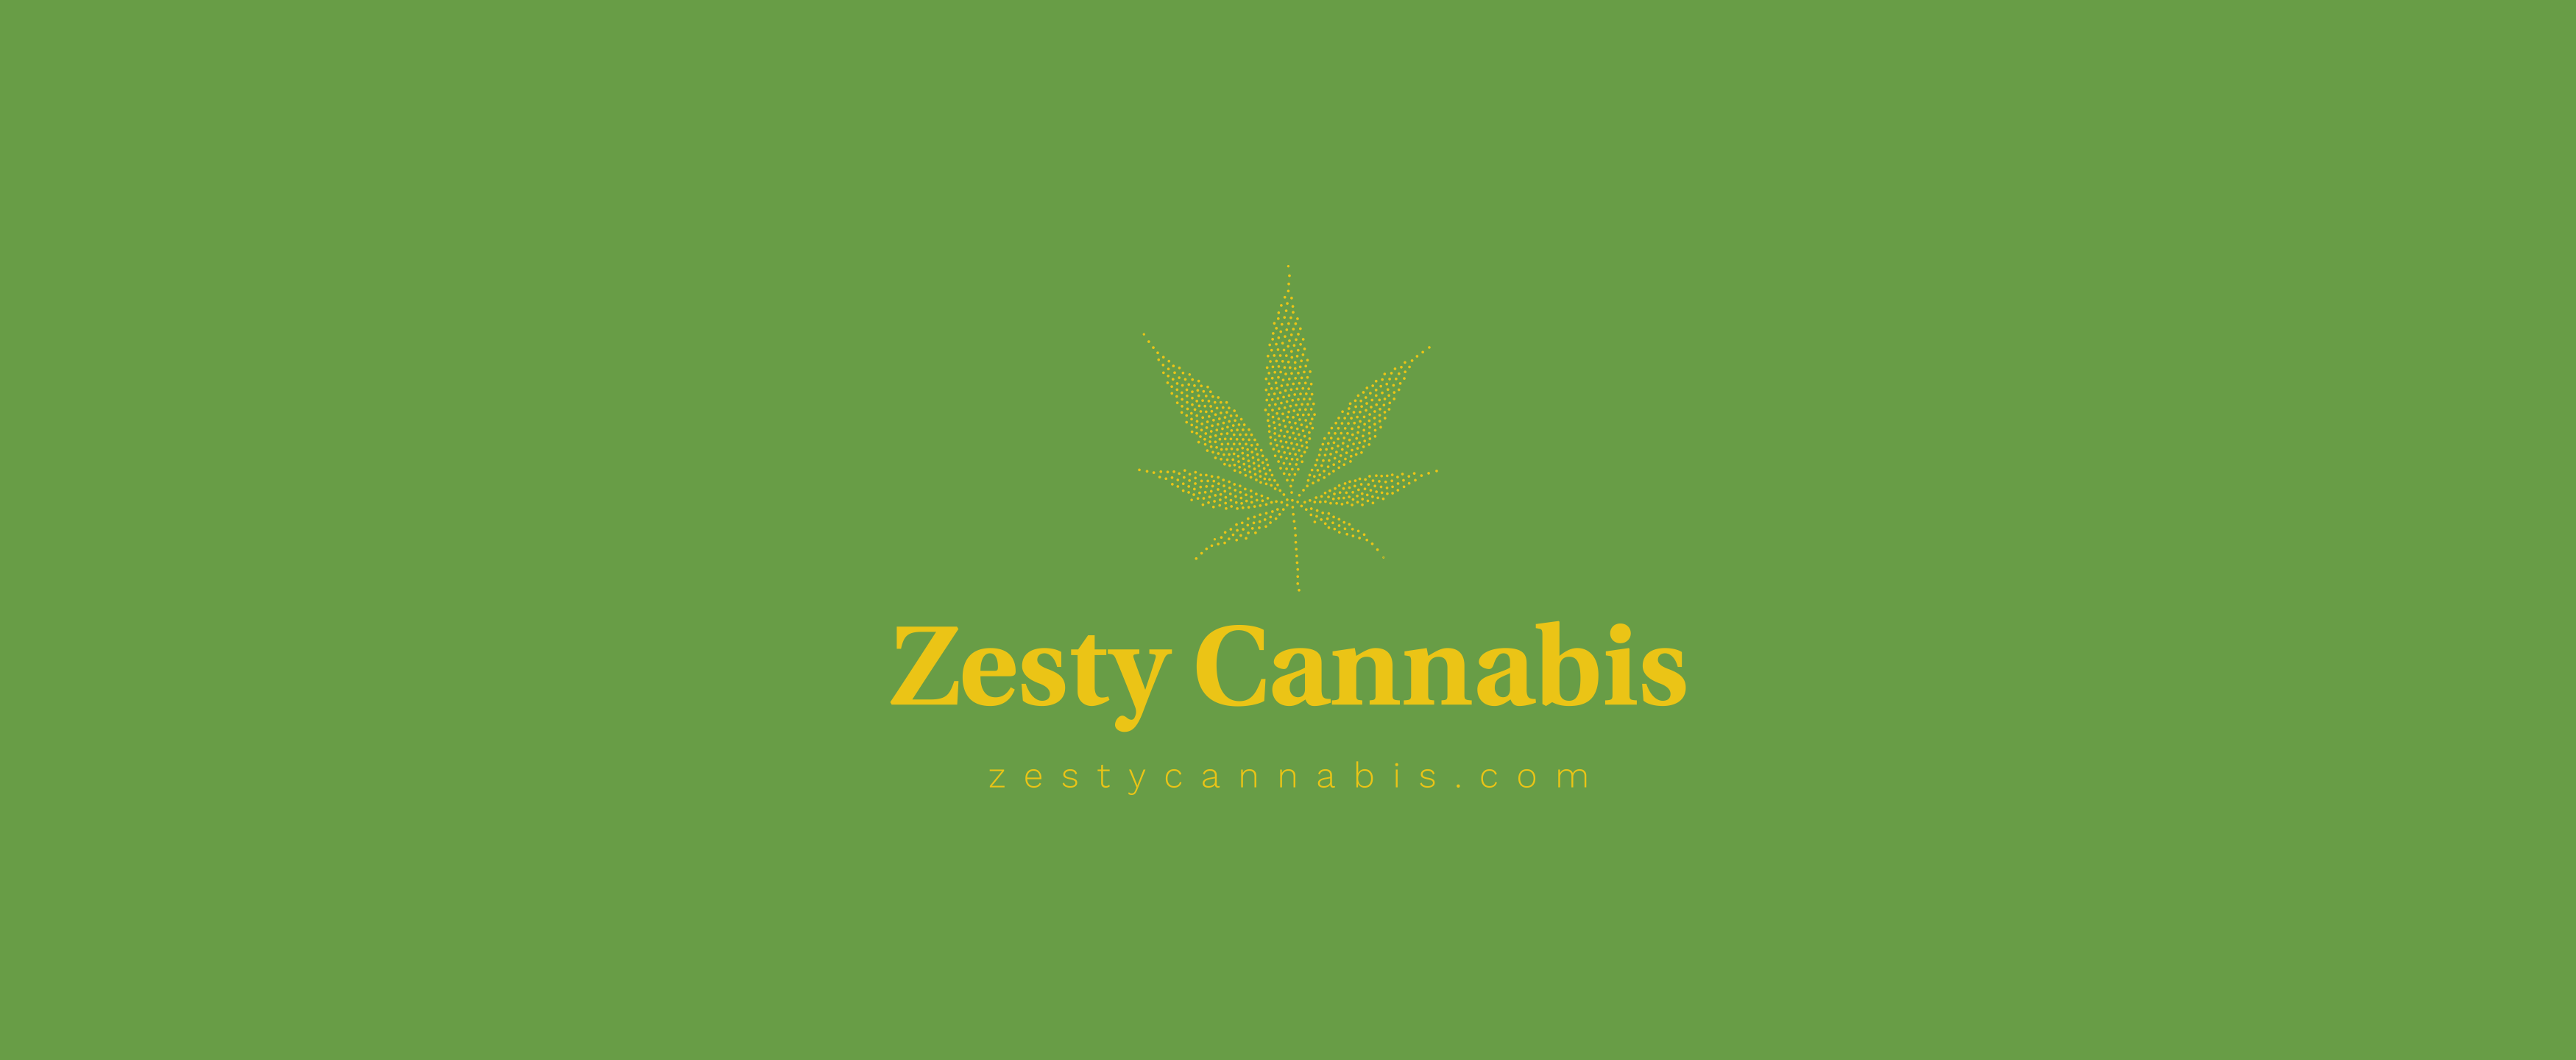 Zesty Cannabis